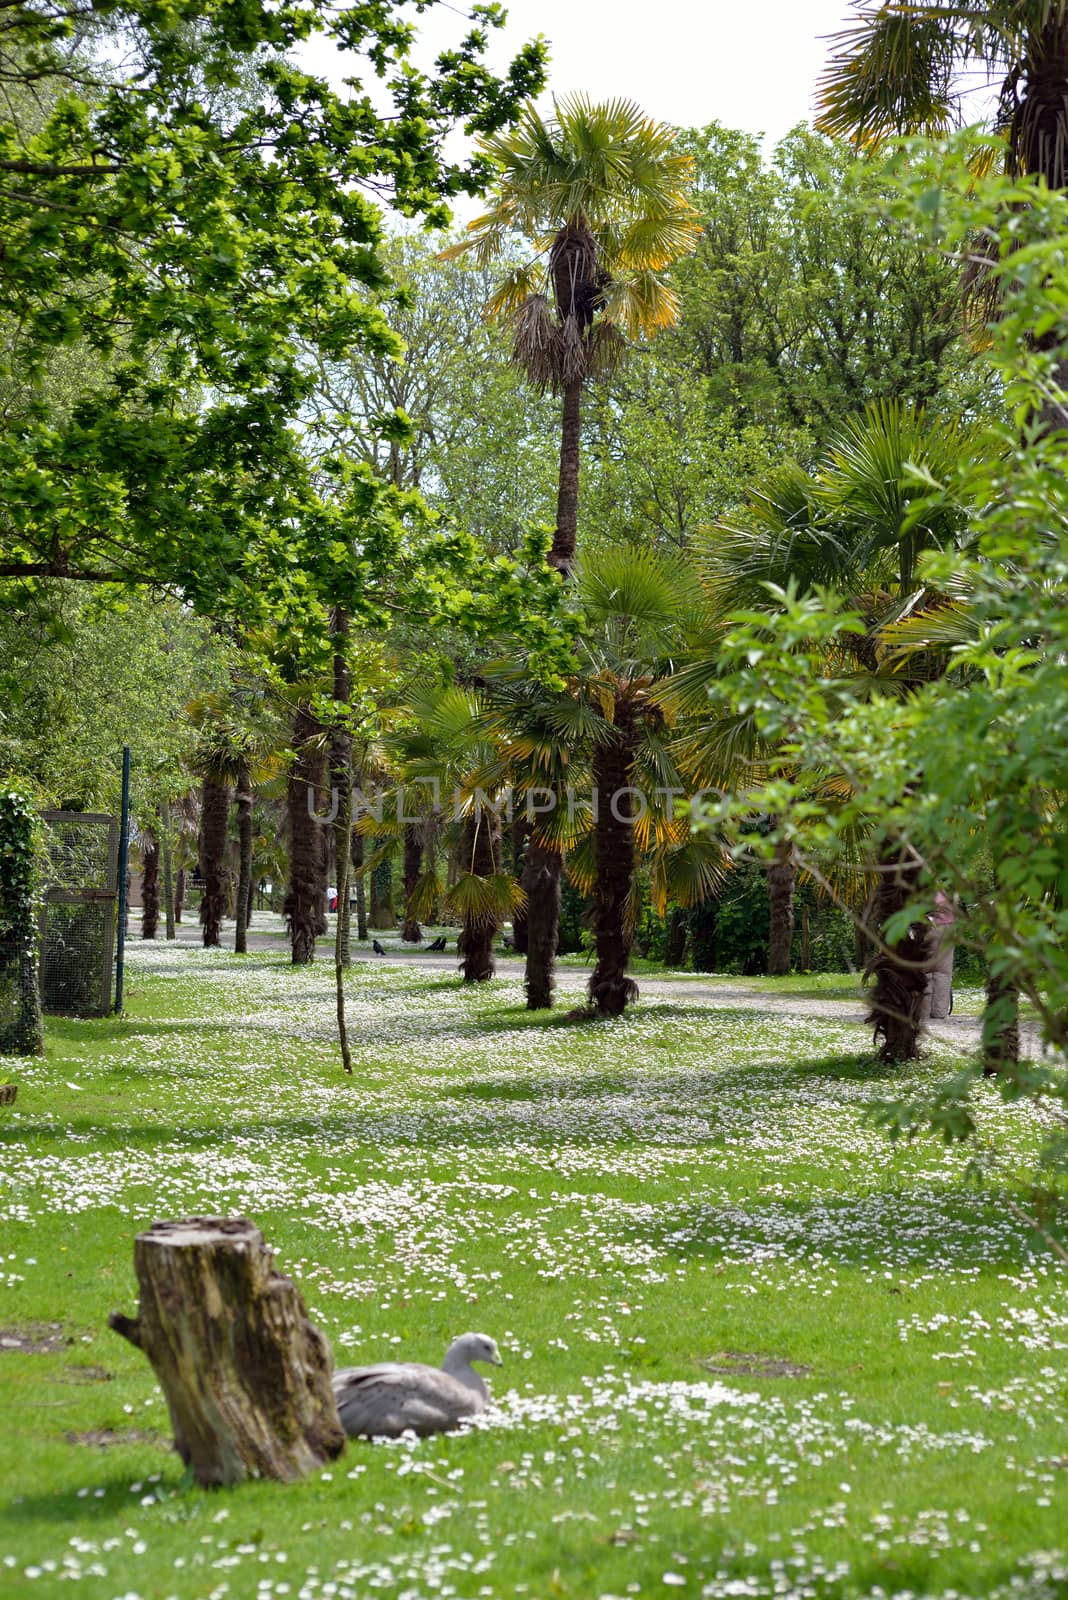 daisy woods in fota wildlife park by morrbyte